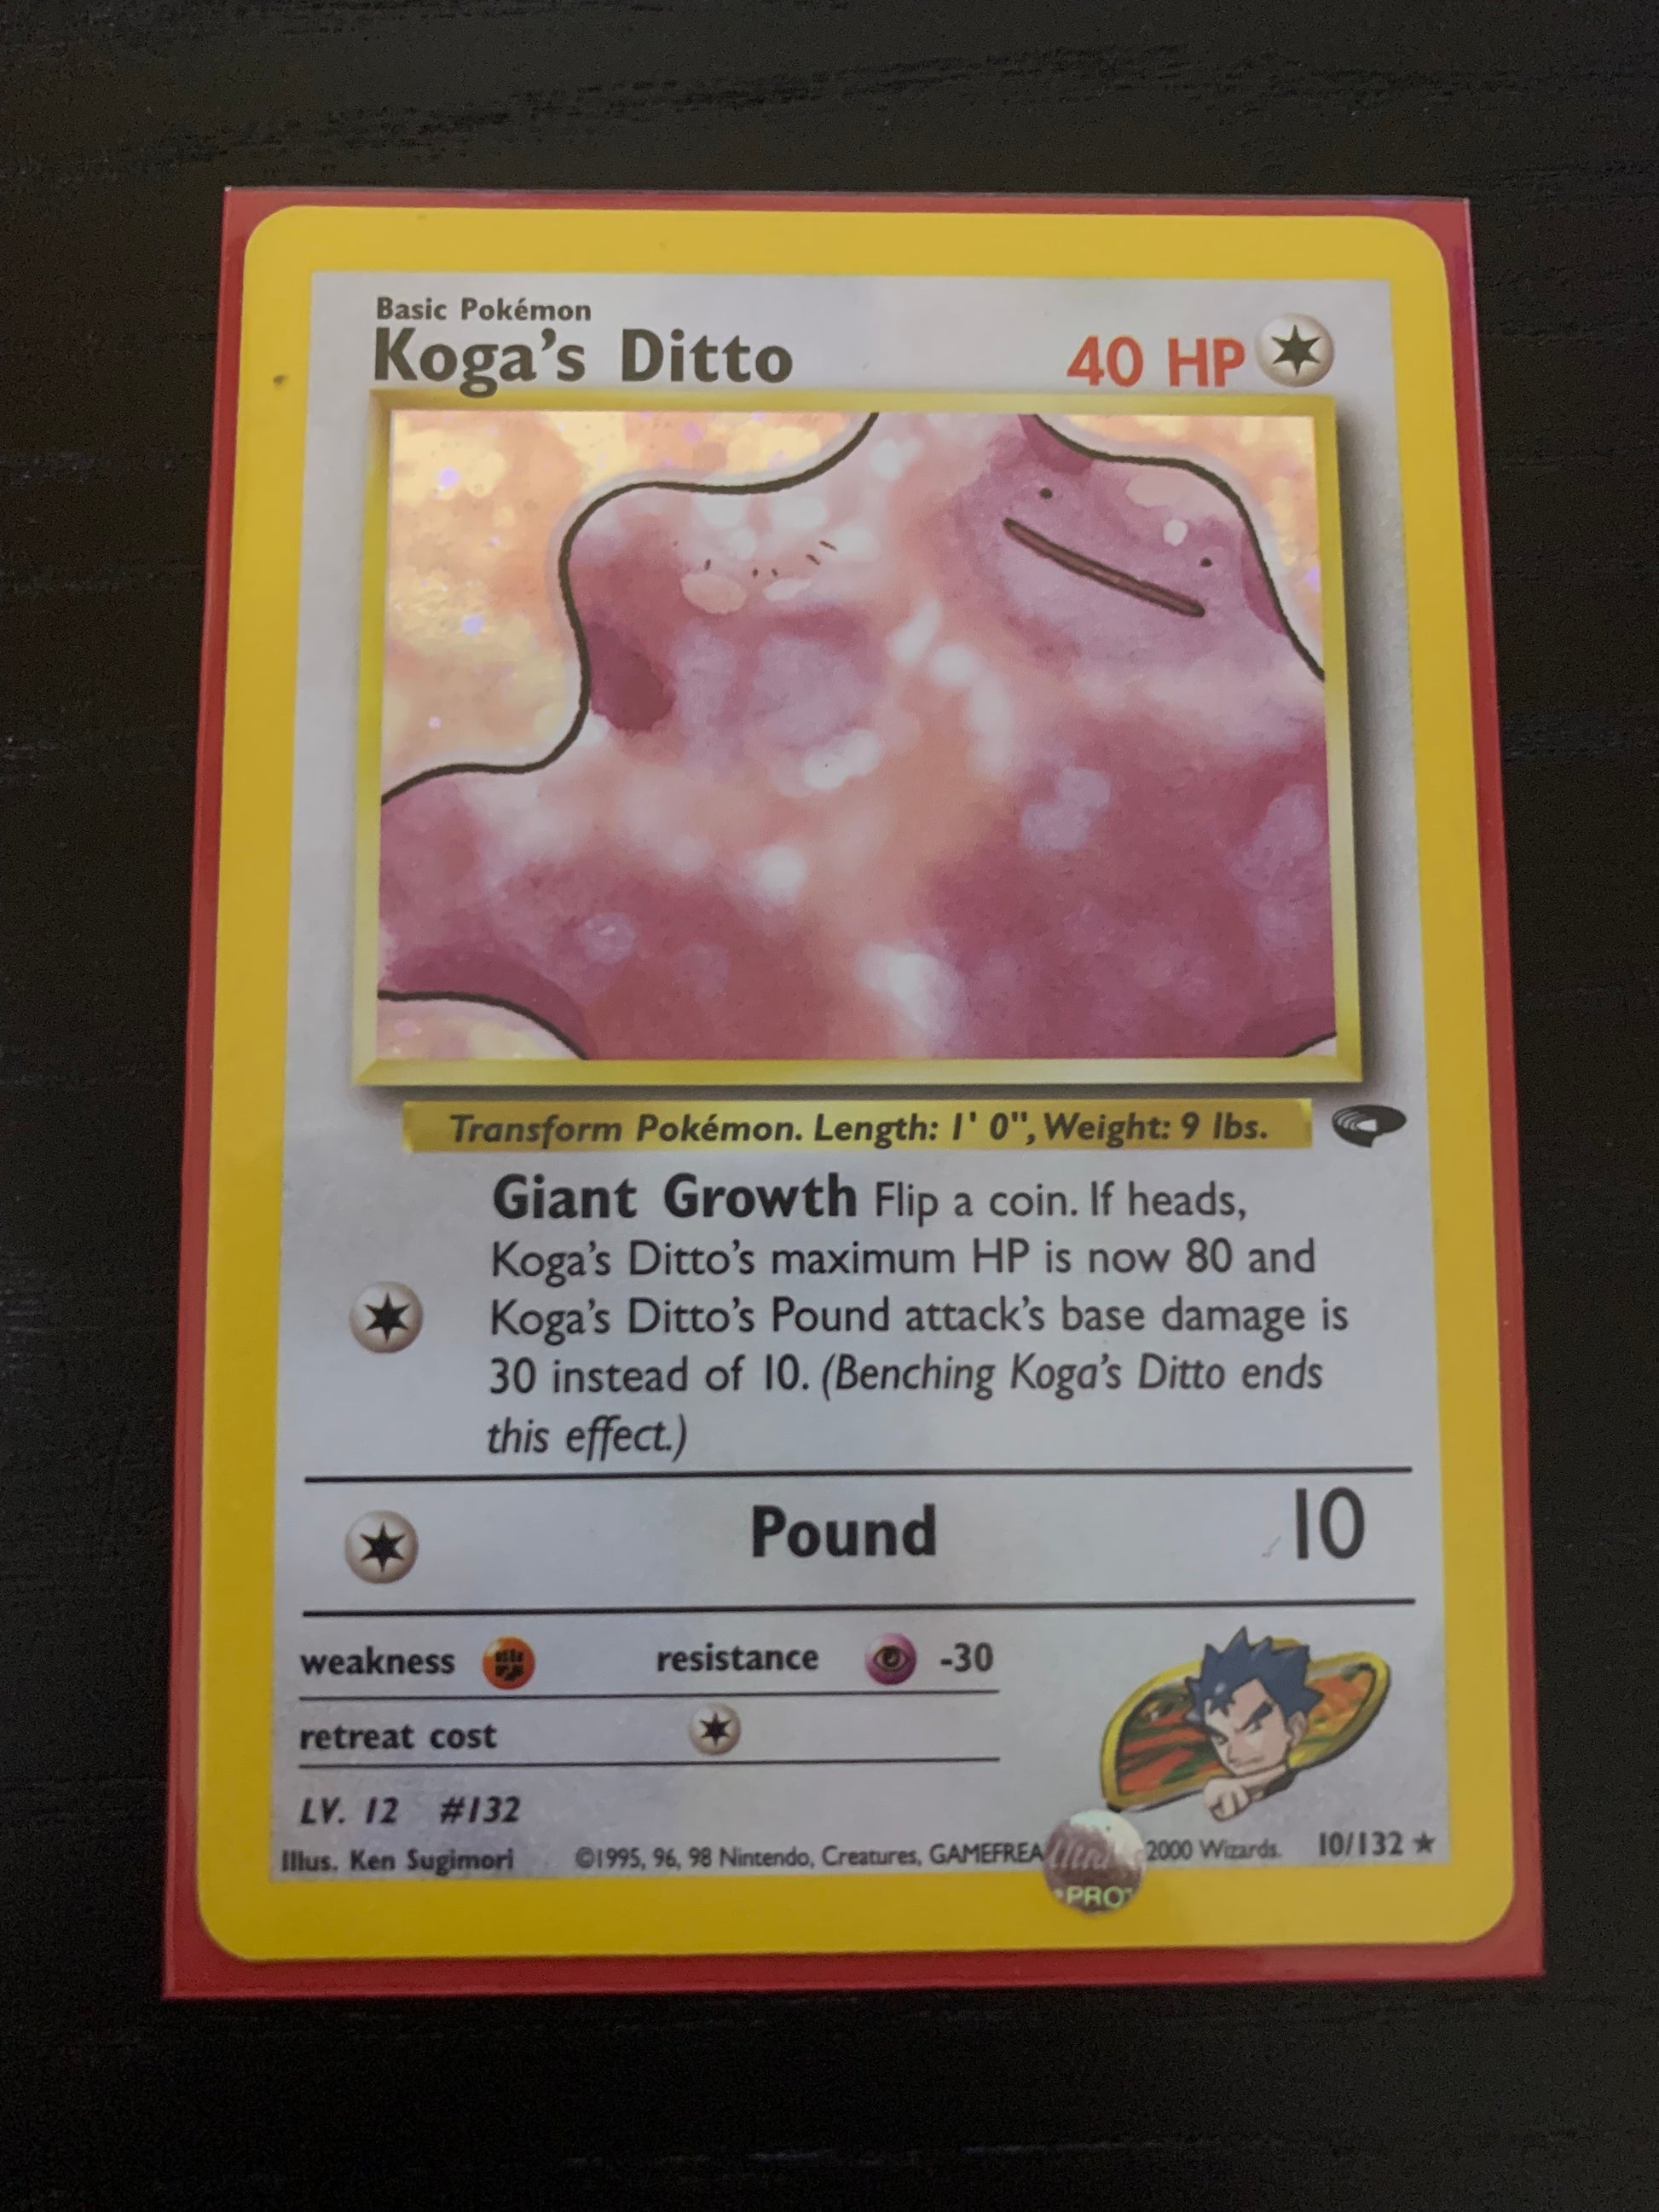 Sale] Koga's Ditto No.132 - Pokemon TCG Japanese